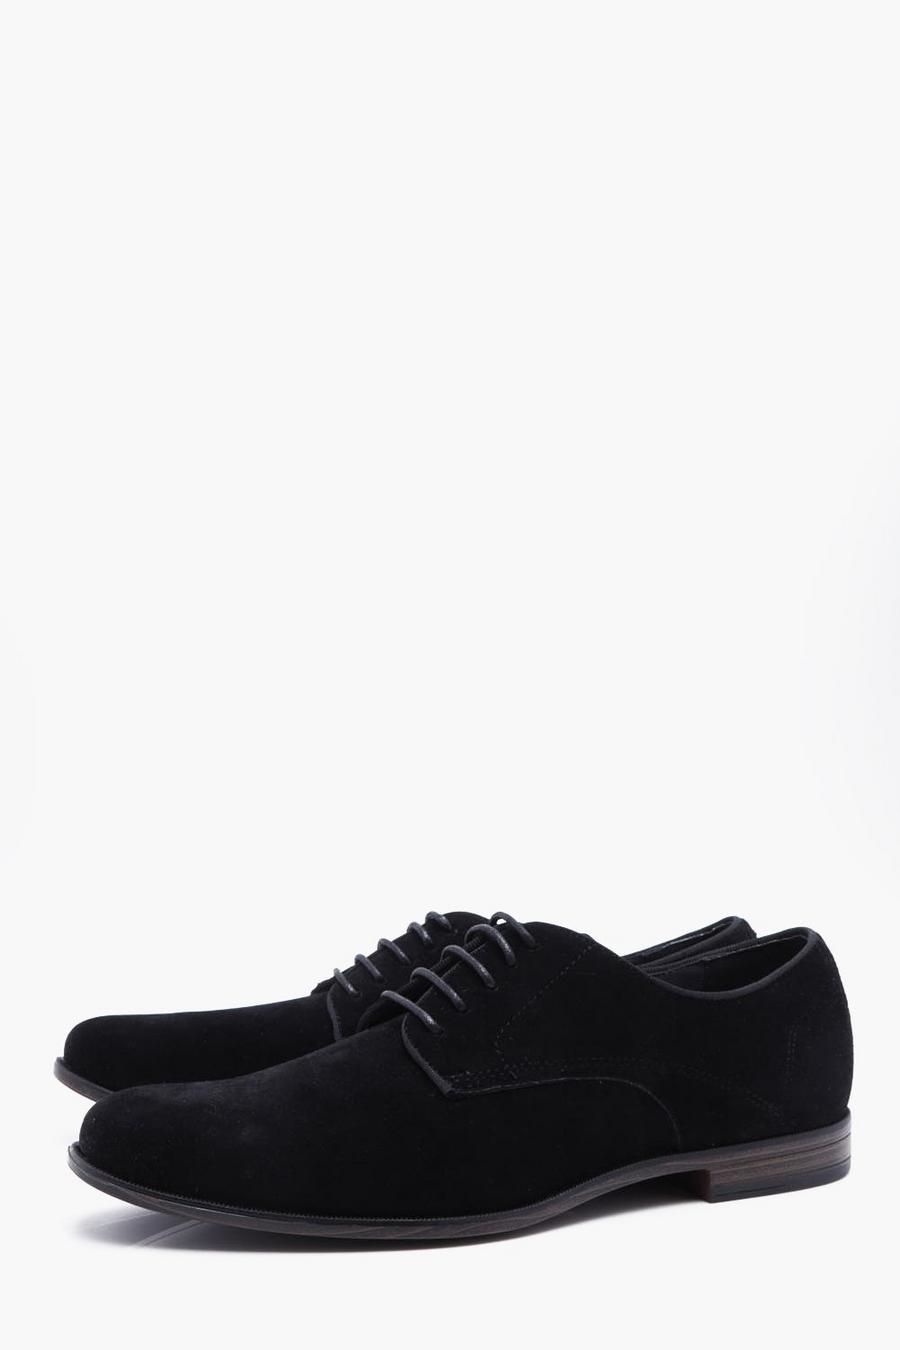 Schwarze Schuhe aus Wildlederimitat, Schwarz black